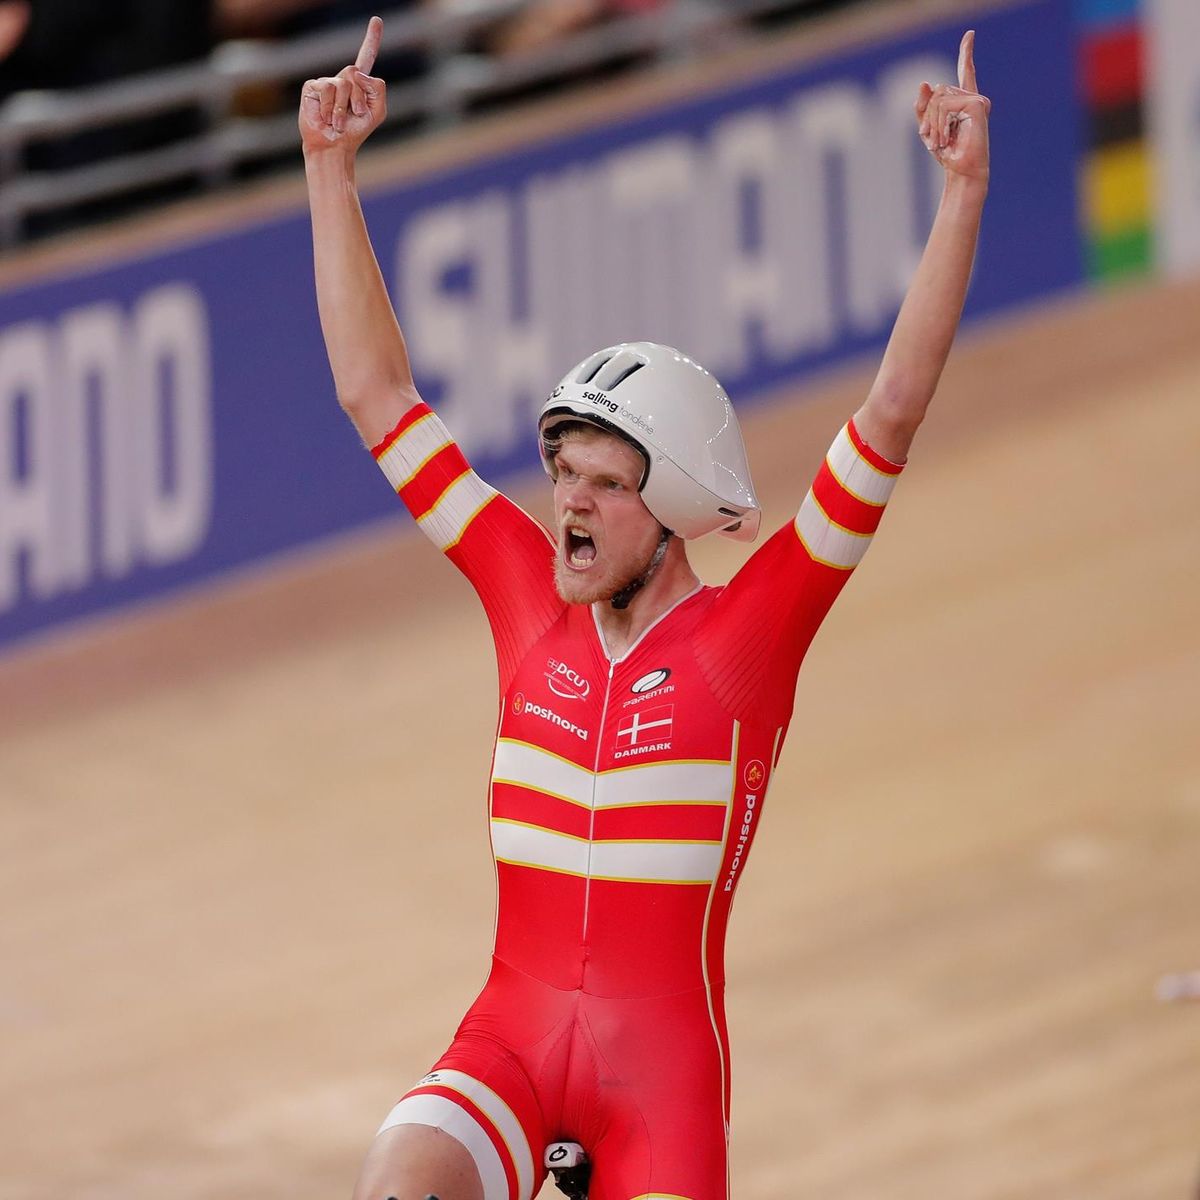 Cycling news - Denmark smash world record to win Team at Track World Championships - Eurosport